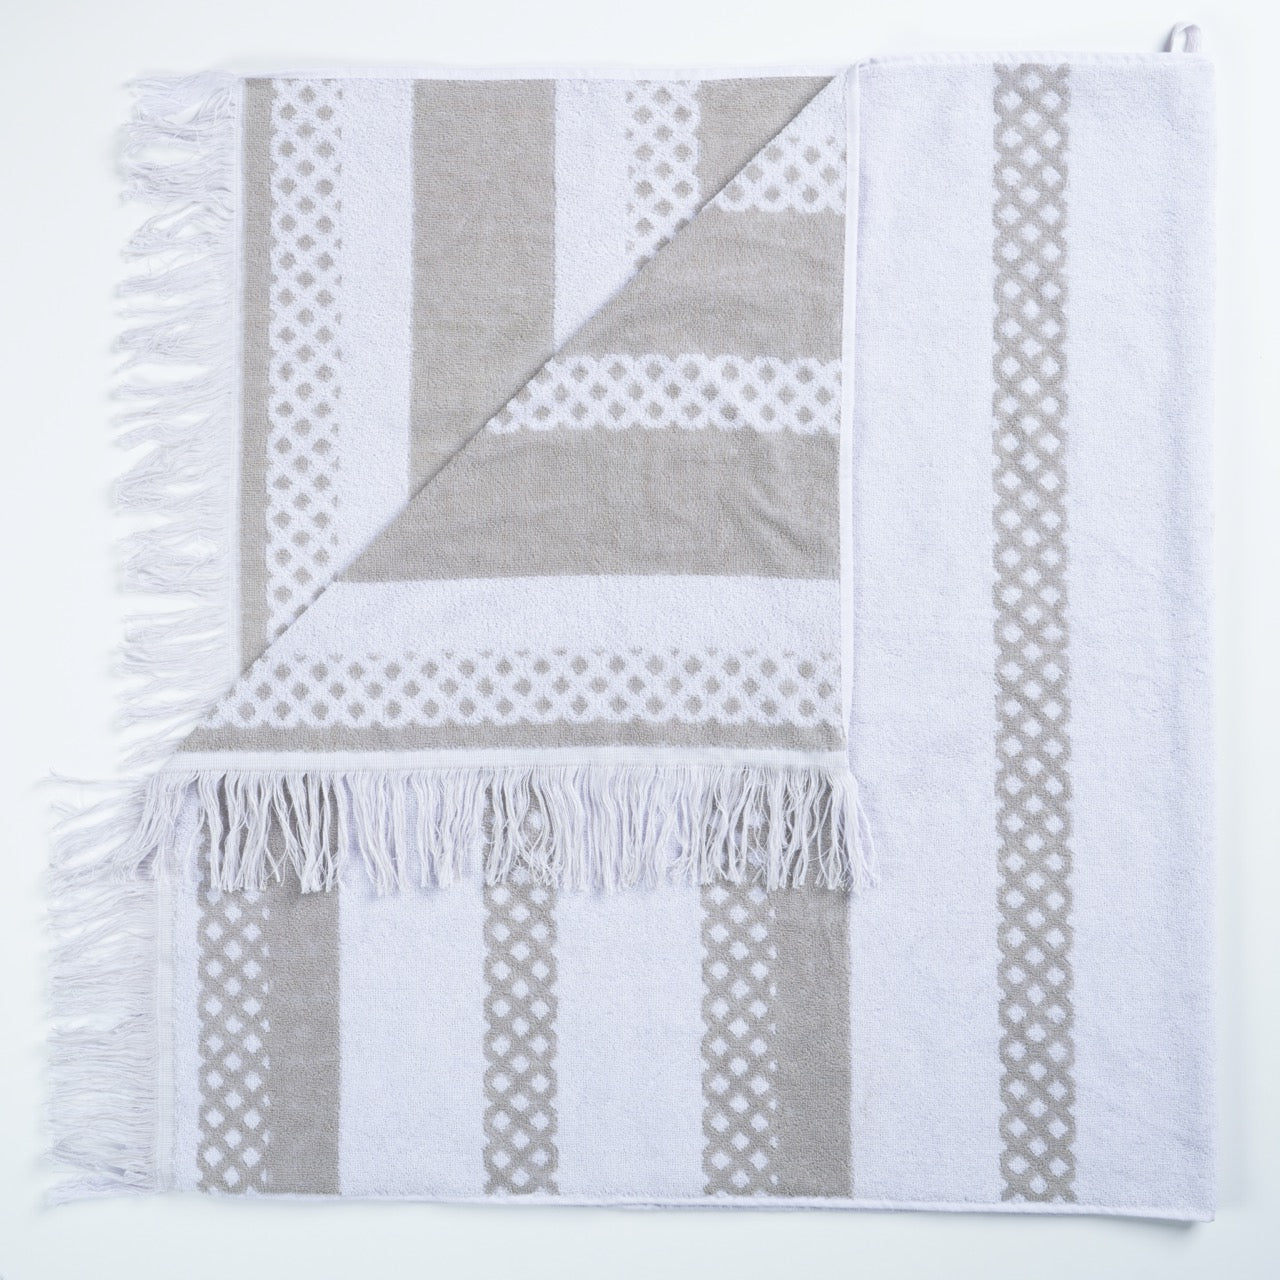 Rakso- Hatched Patterns Towel